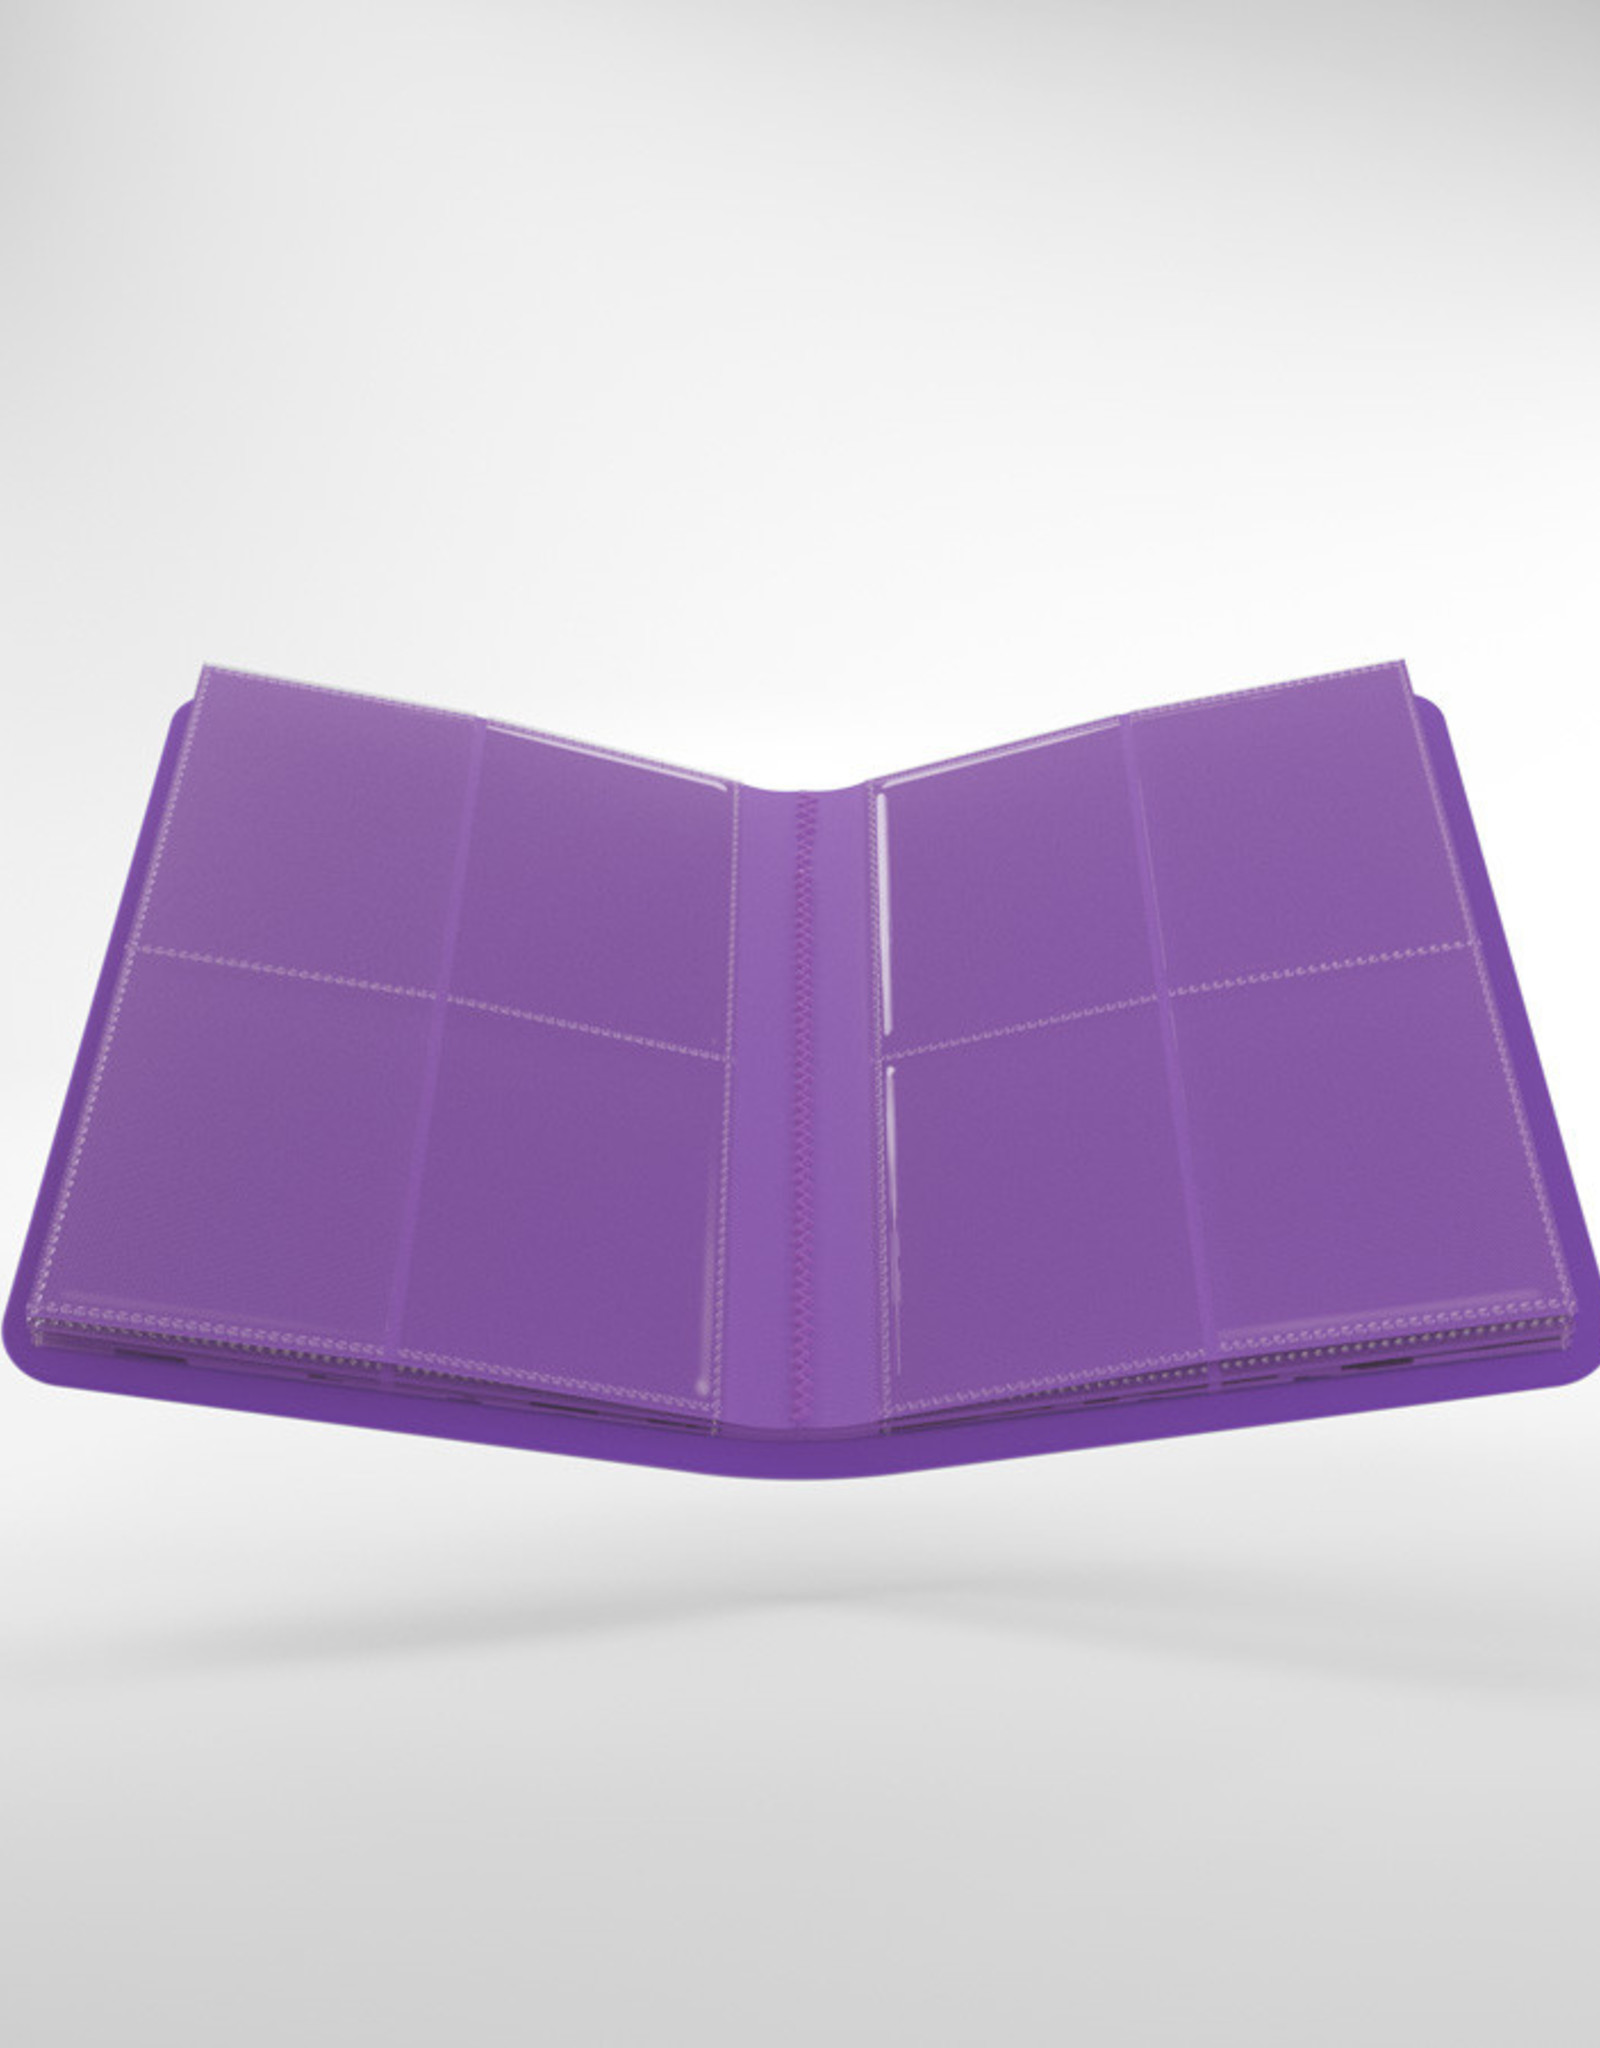 Casual Album: 8-Pocket Side-Loading Purple